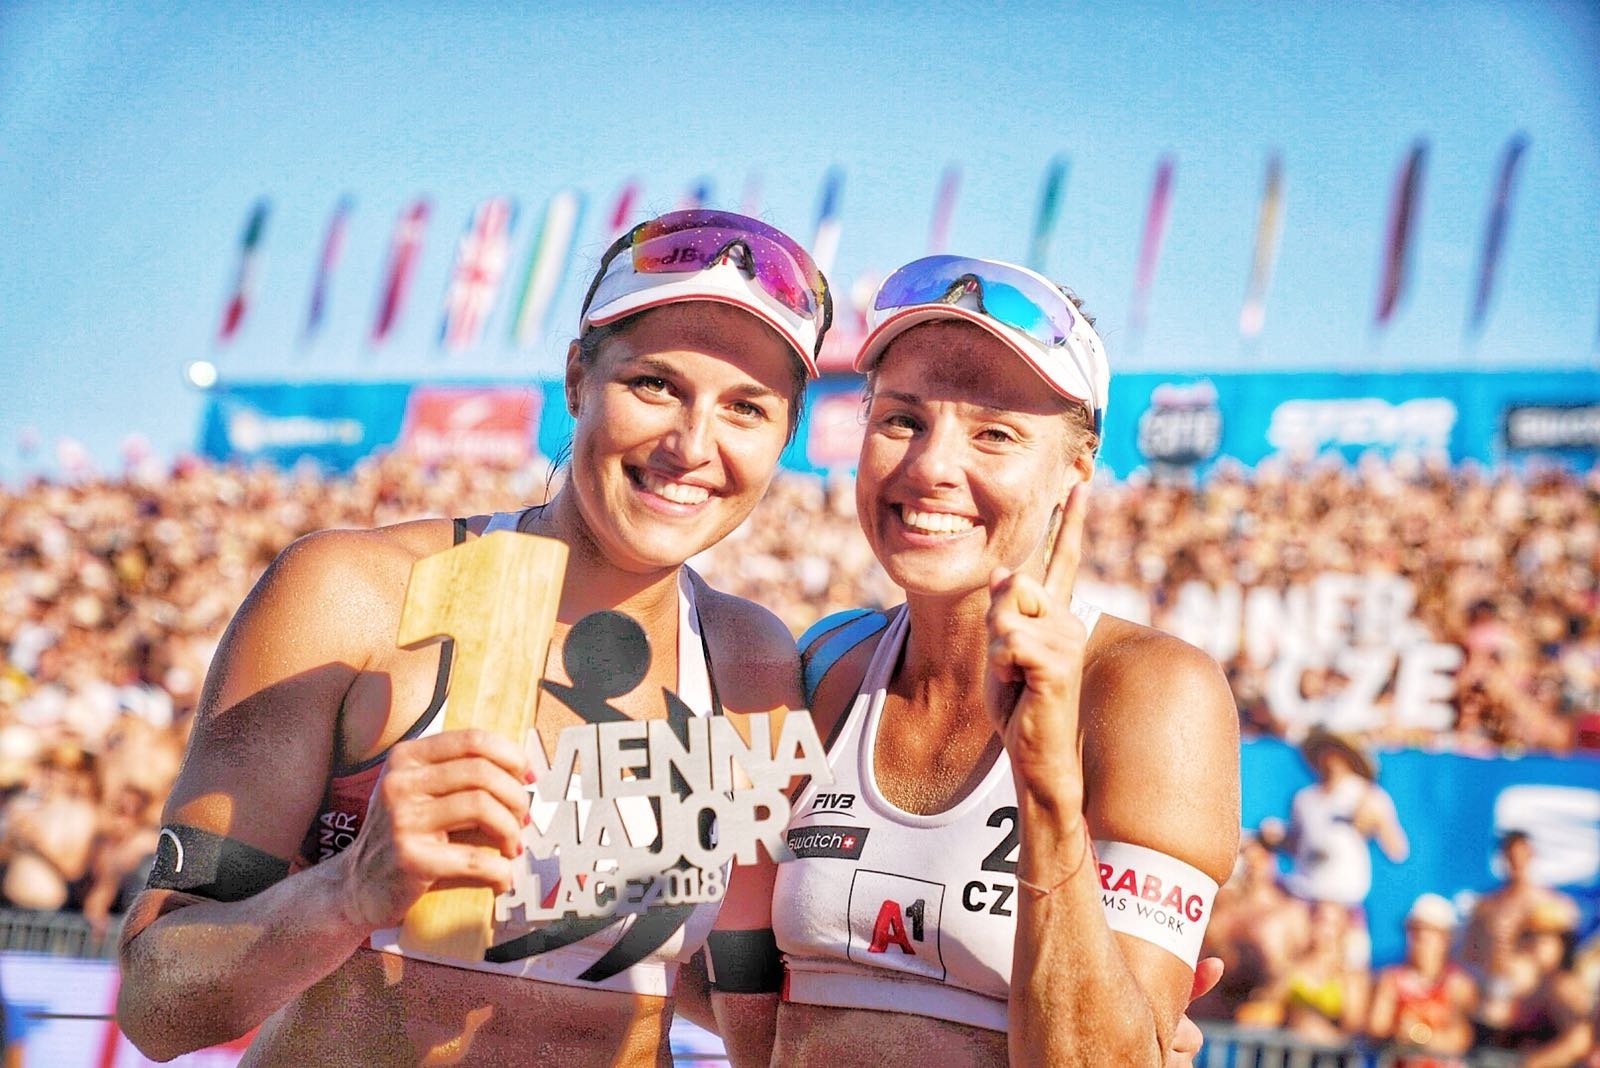 Barbora (left) and Marketa all smiles after their Vienna Major triumph